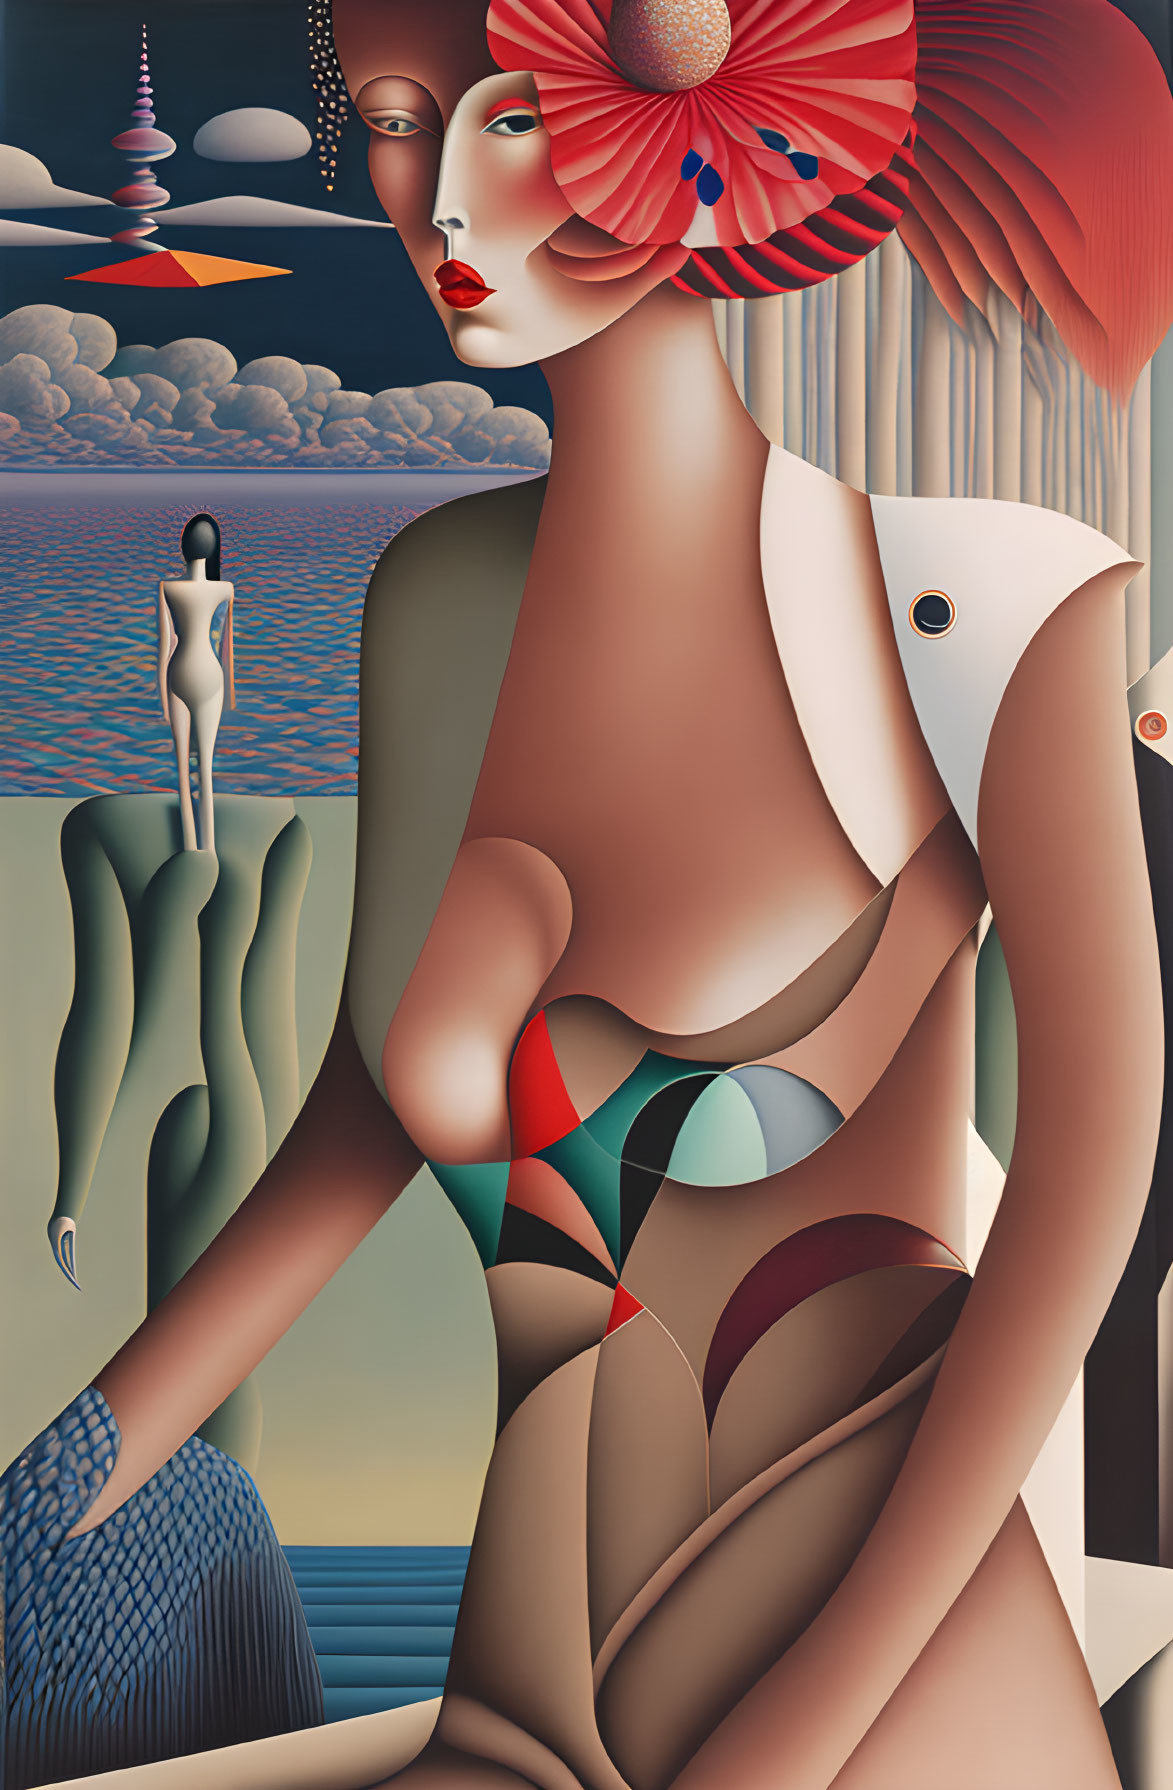 Stylized surreal female figure against serene seascape